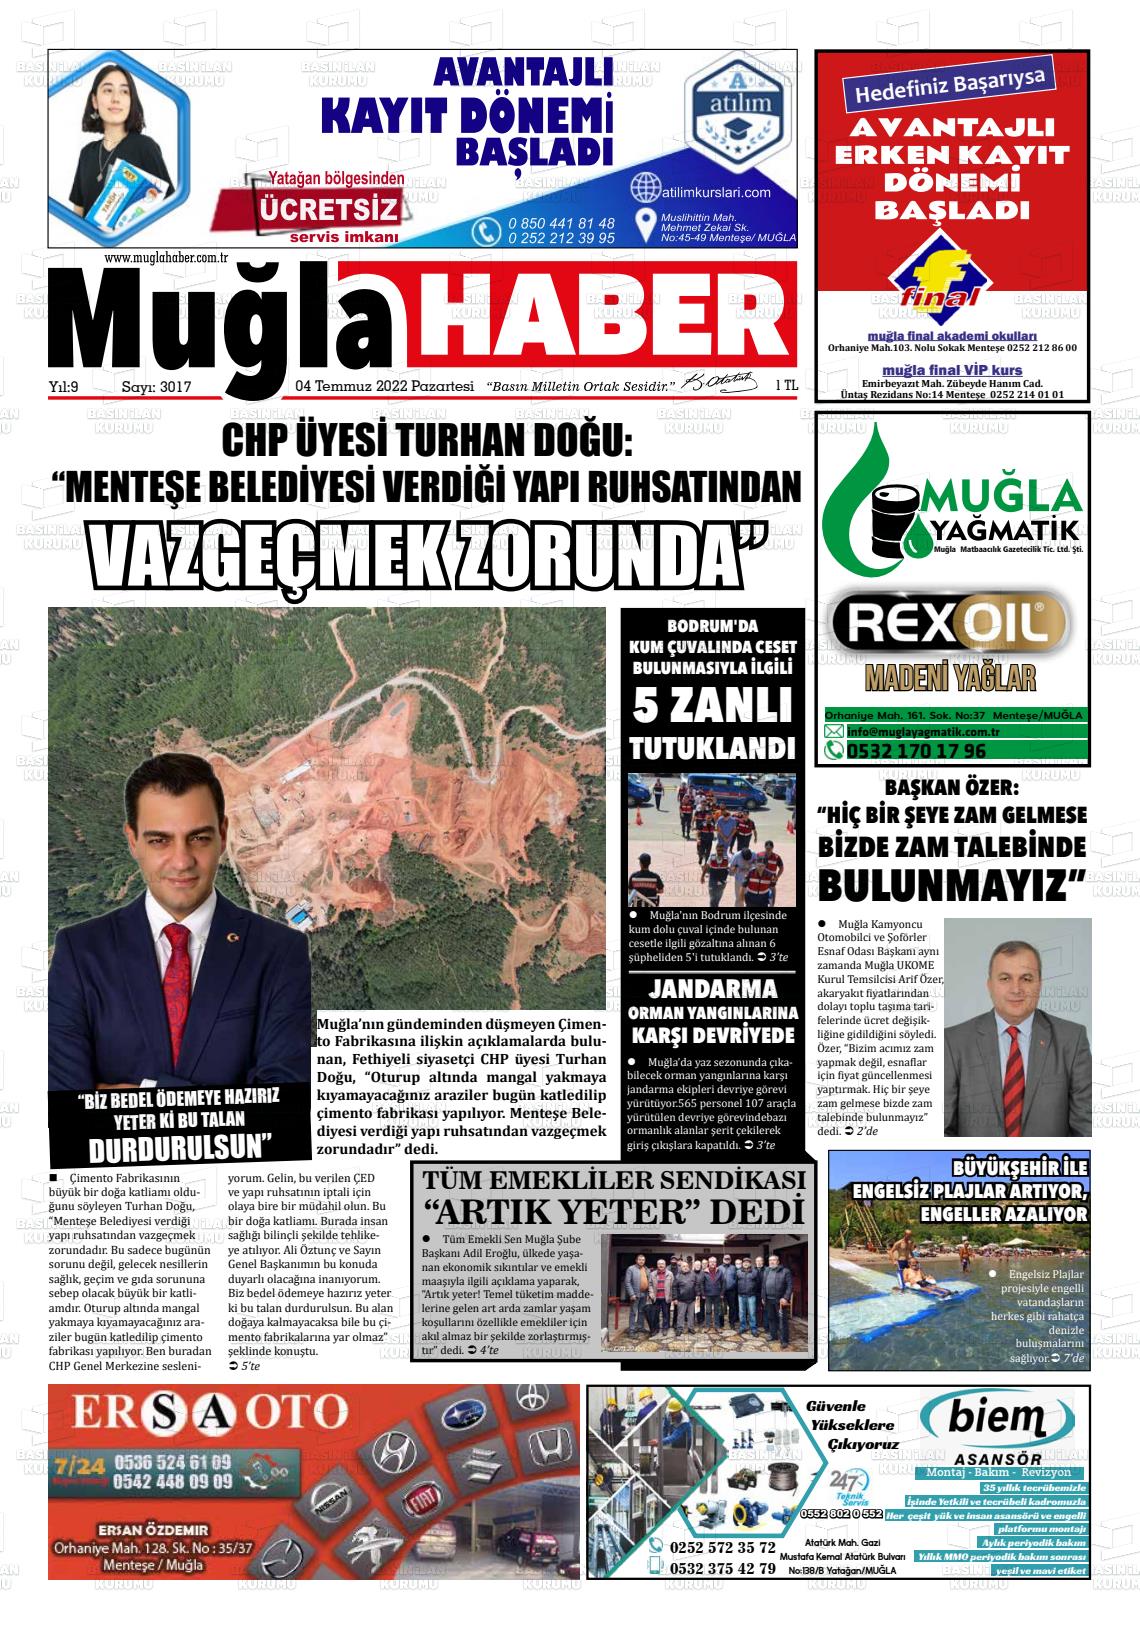 04 Temmuz 2022 Muğla Haber Gazete Manşeti